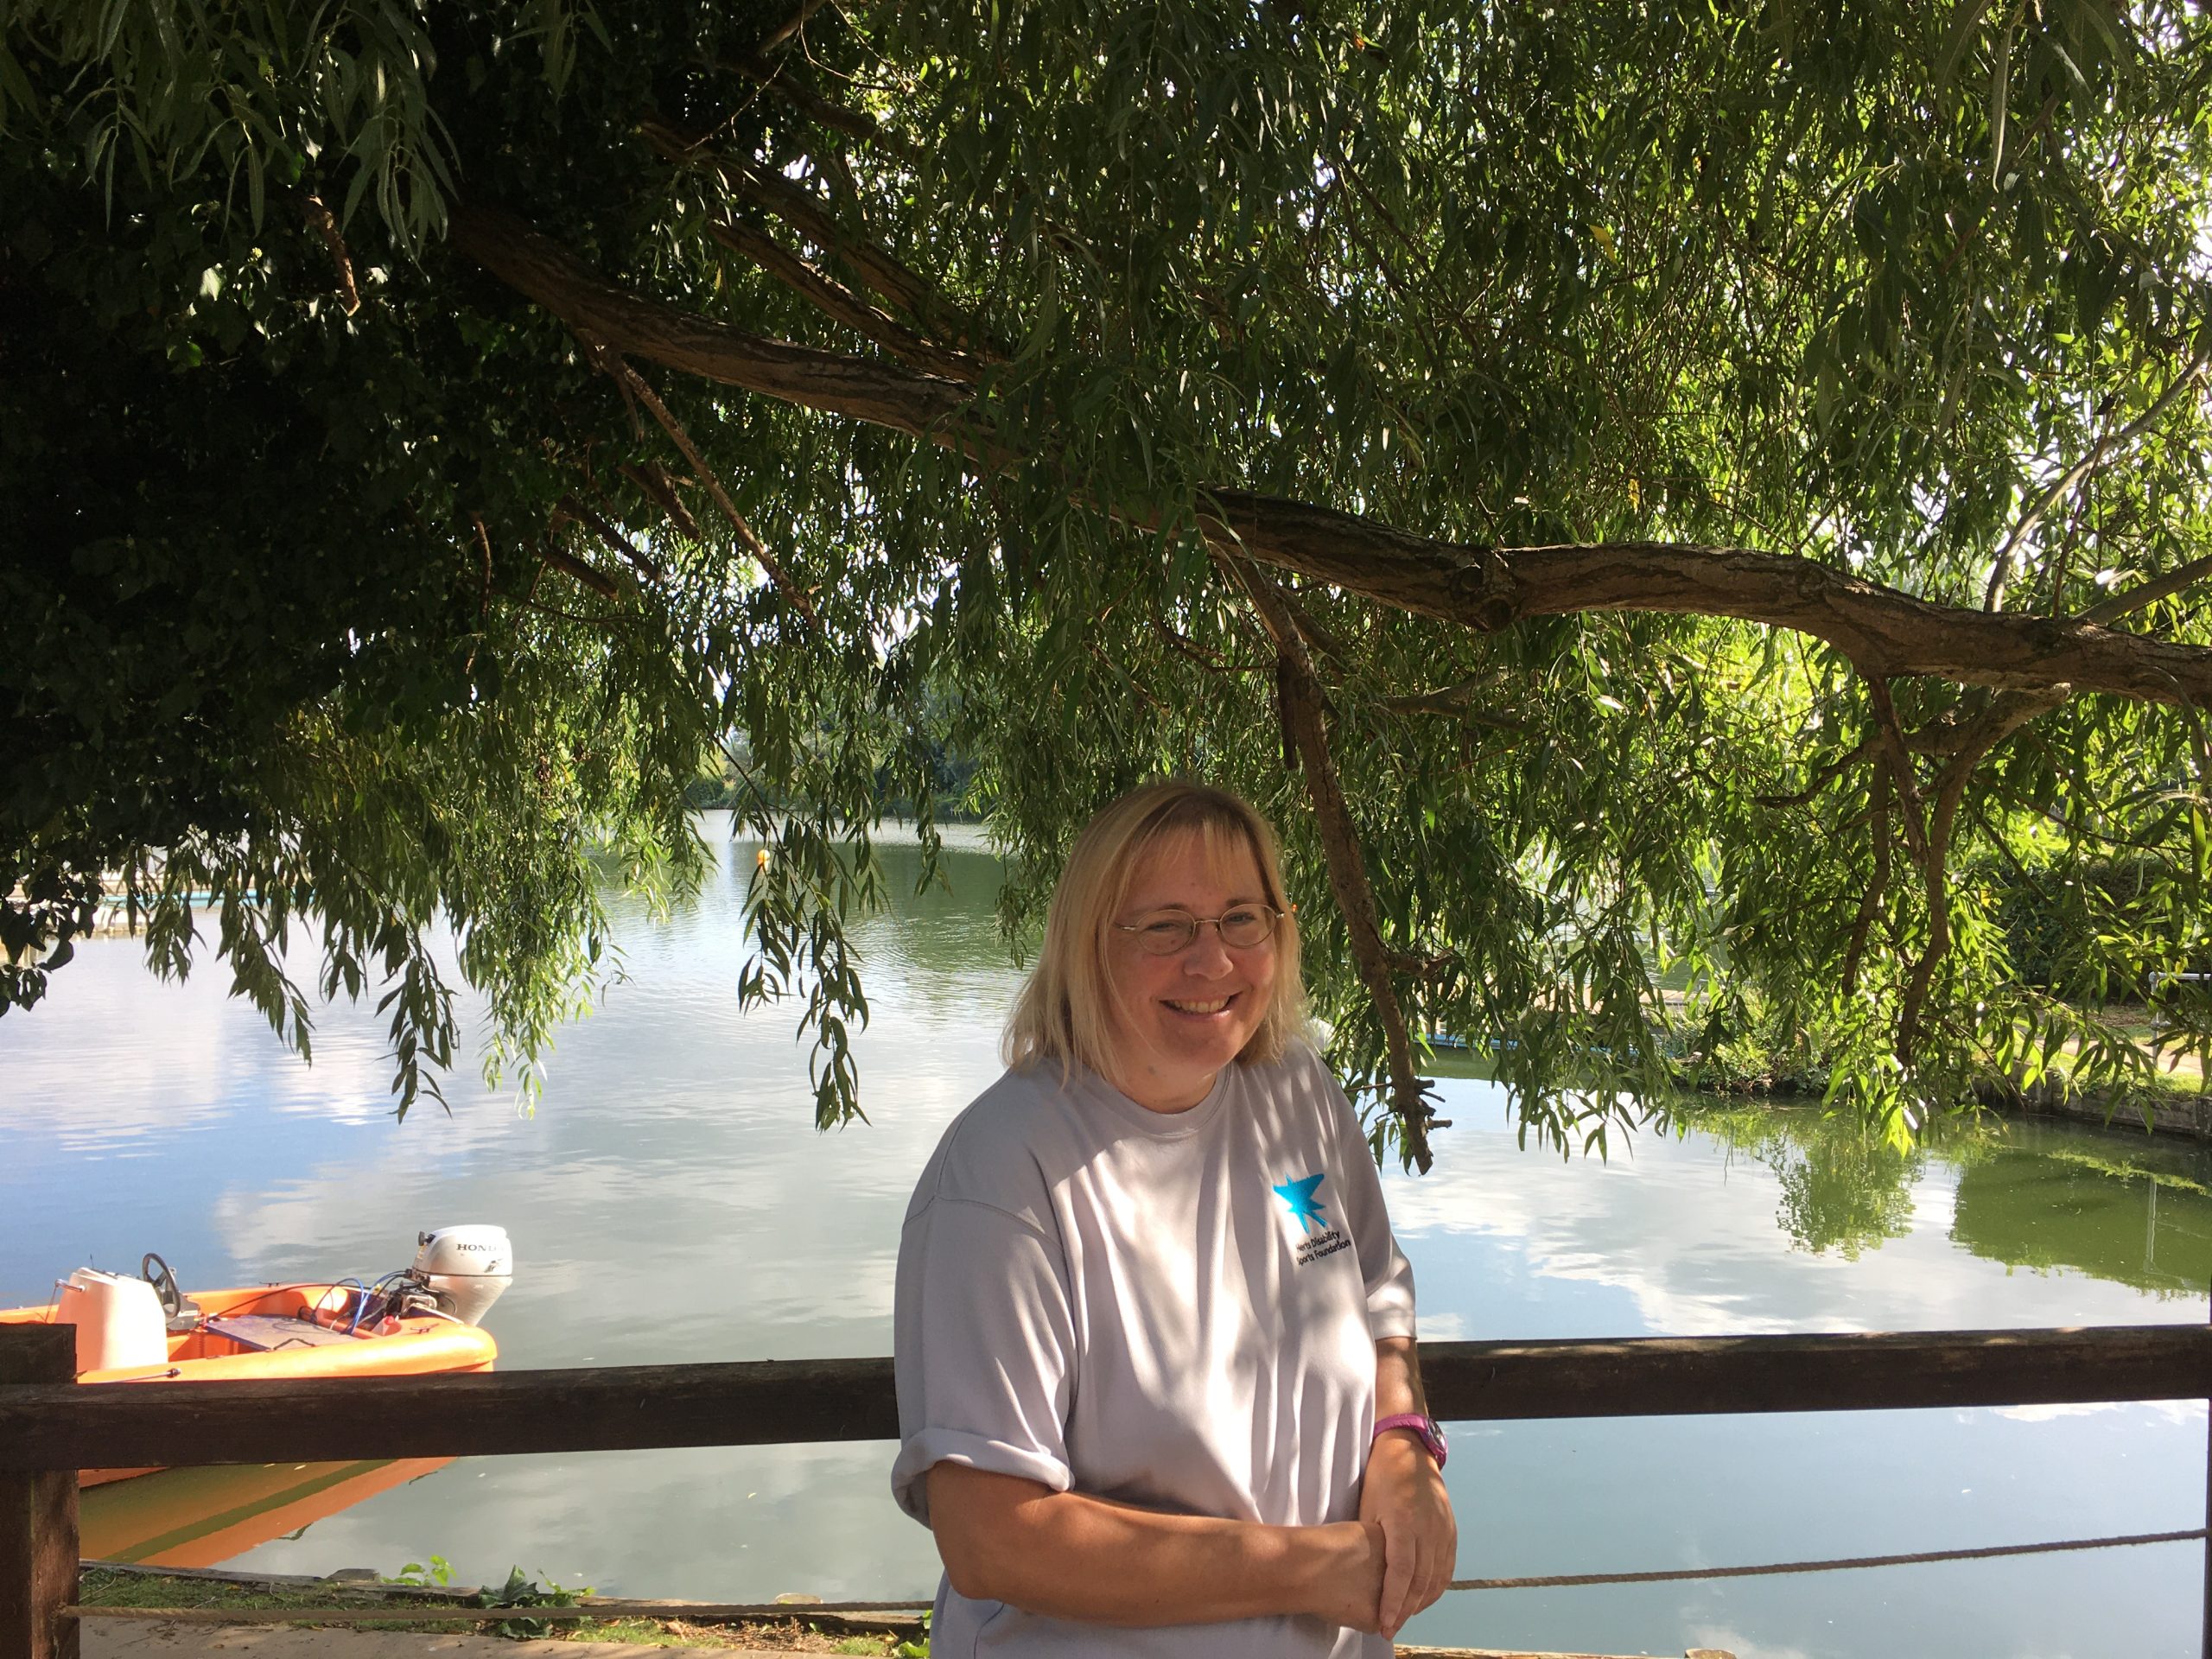 Volunteer Karen by the lake